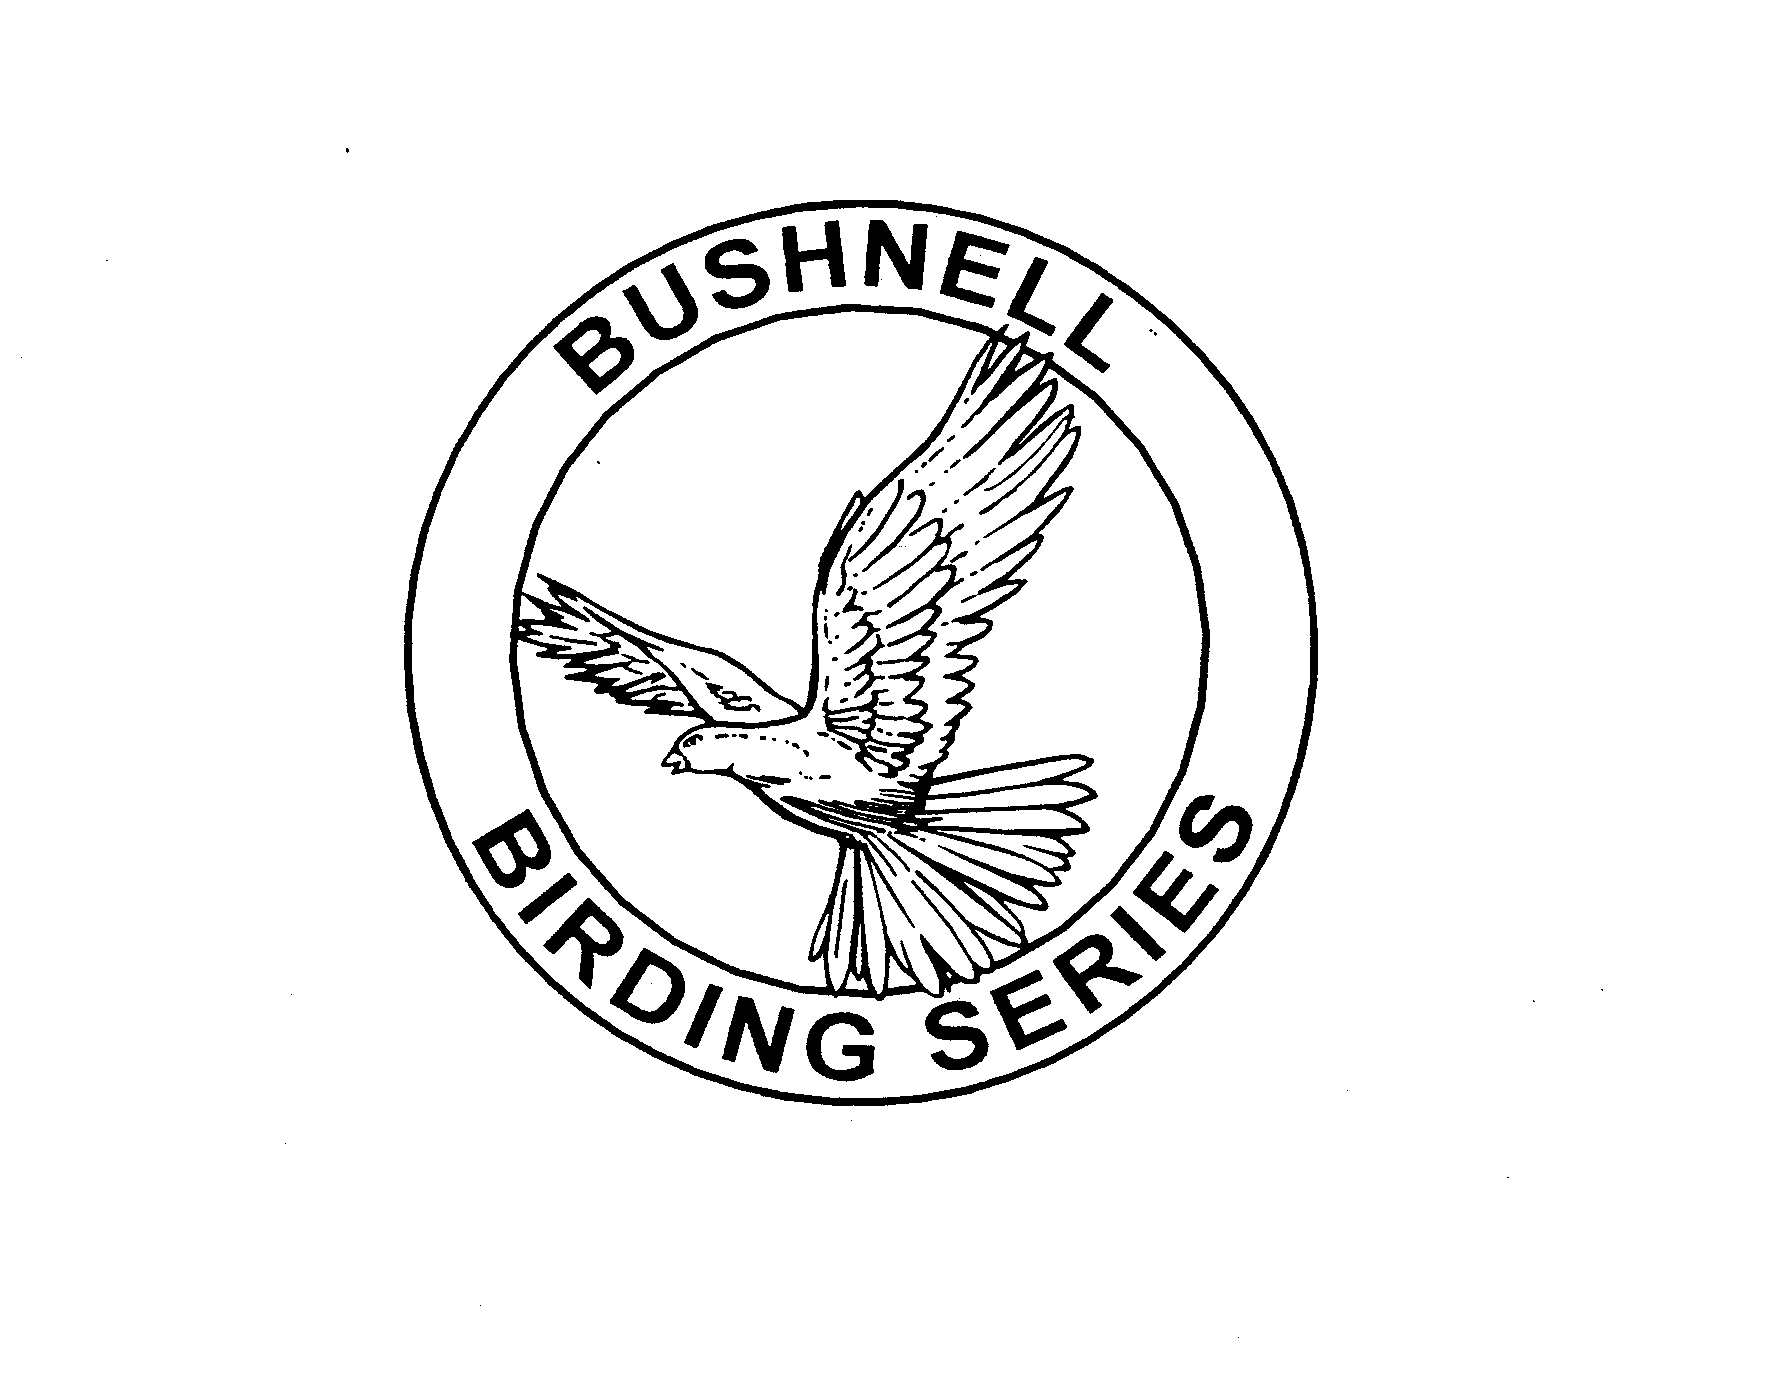  BUSHNELL BIRDING SERIES